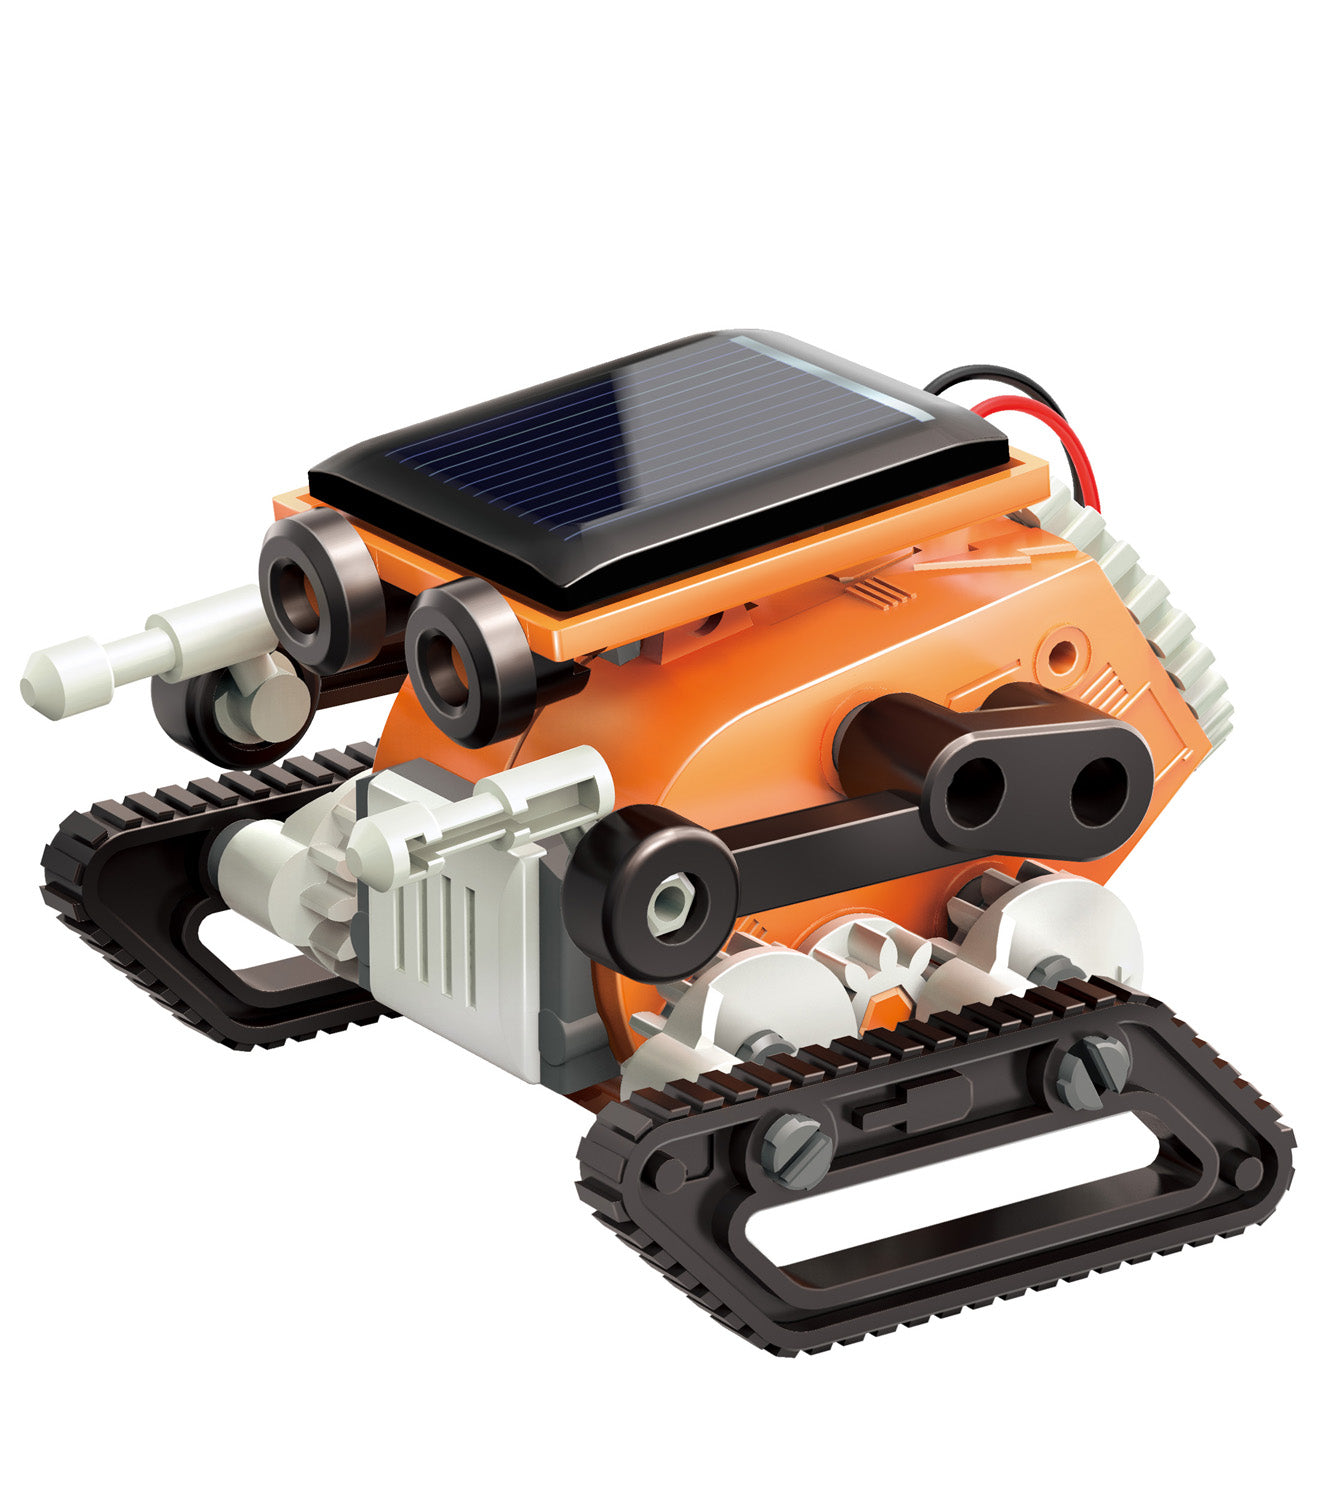 Solar Bots - 8 in 1 Solar Robot Kit    